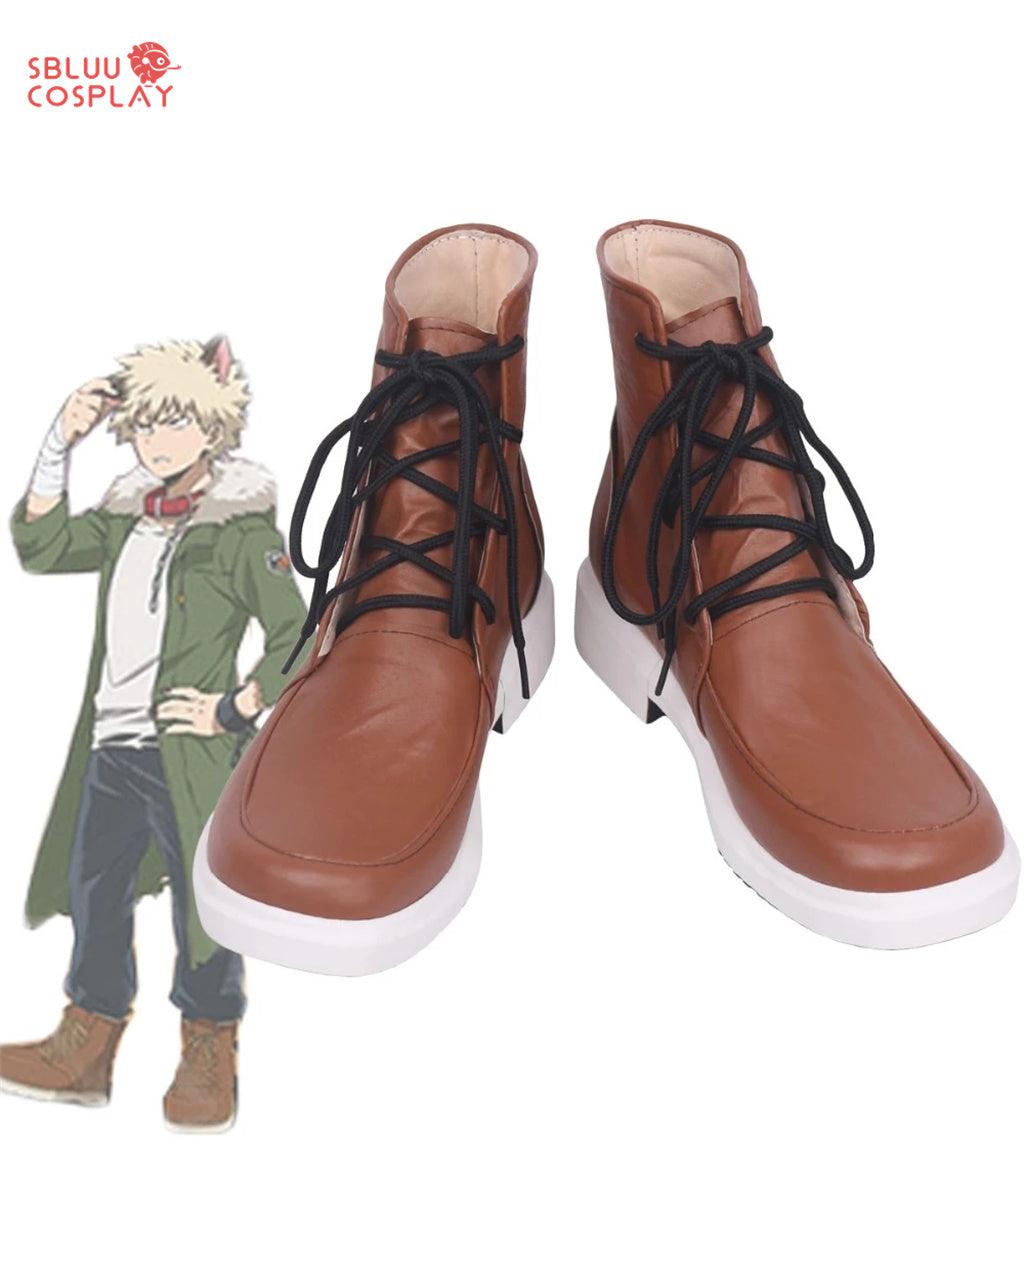 My Hero Academia Katsuki Bakugo Cosplay Shoes Custom Made Boots - SBluuCosplay